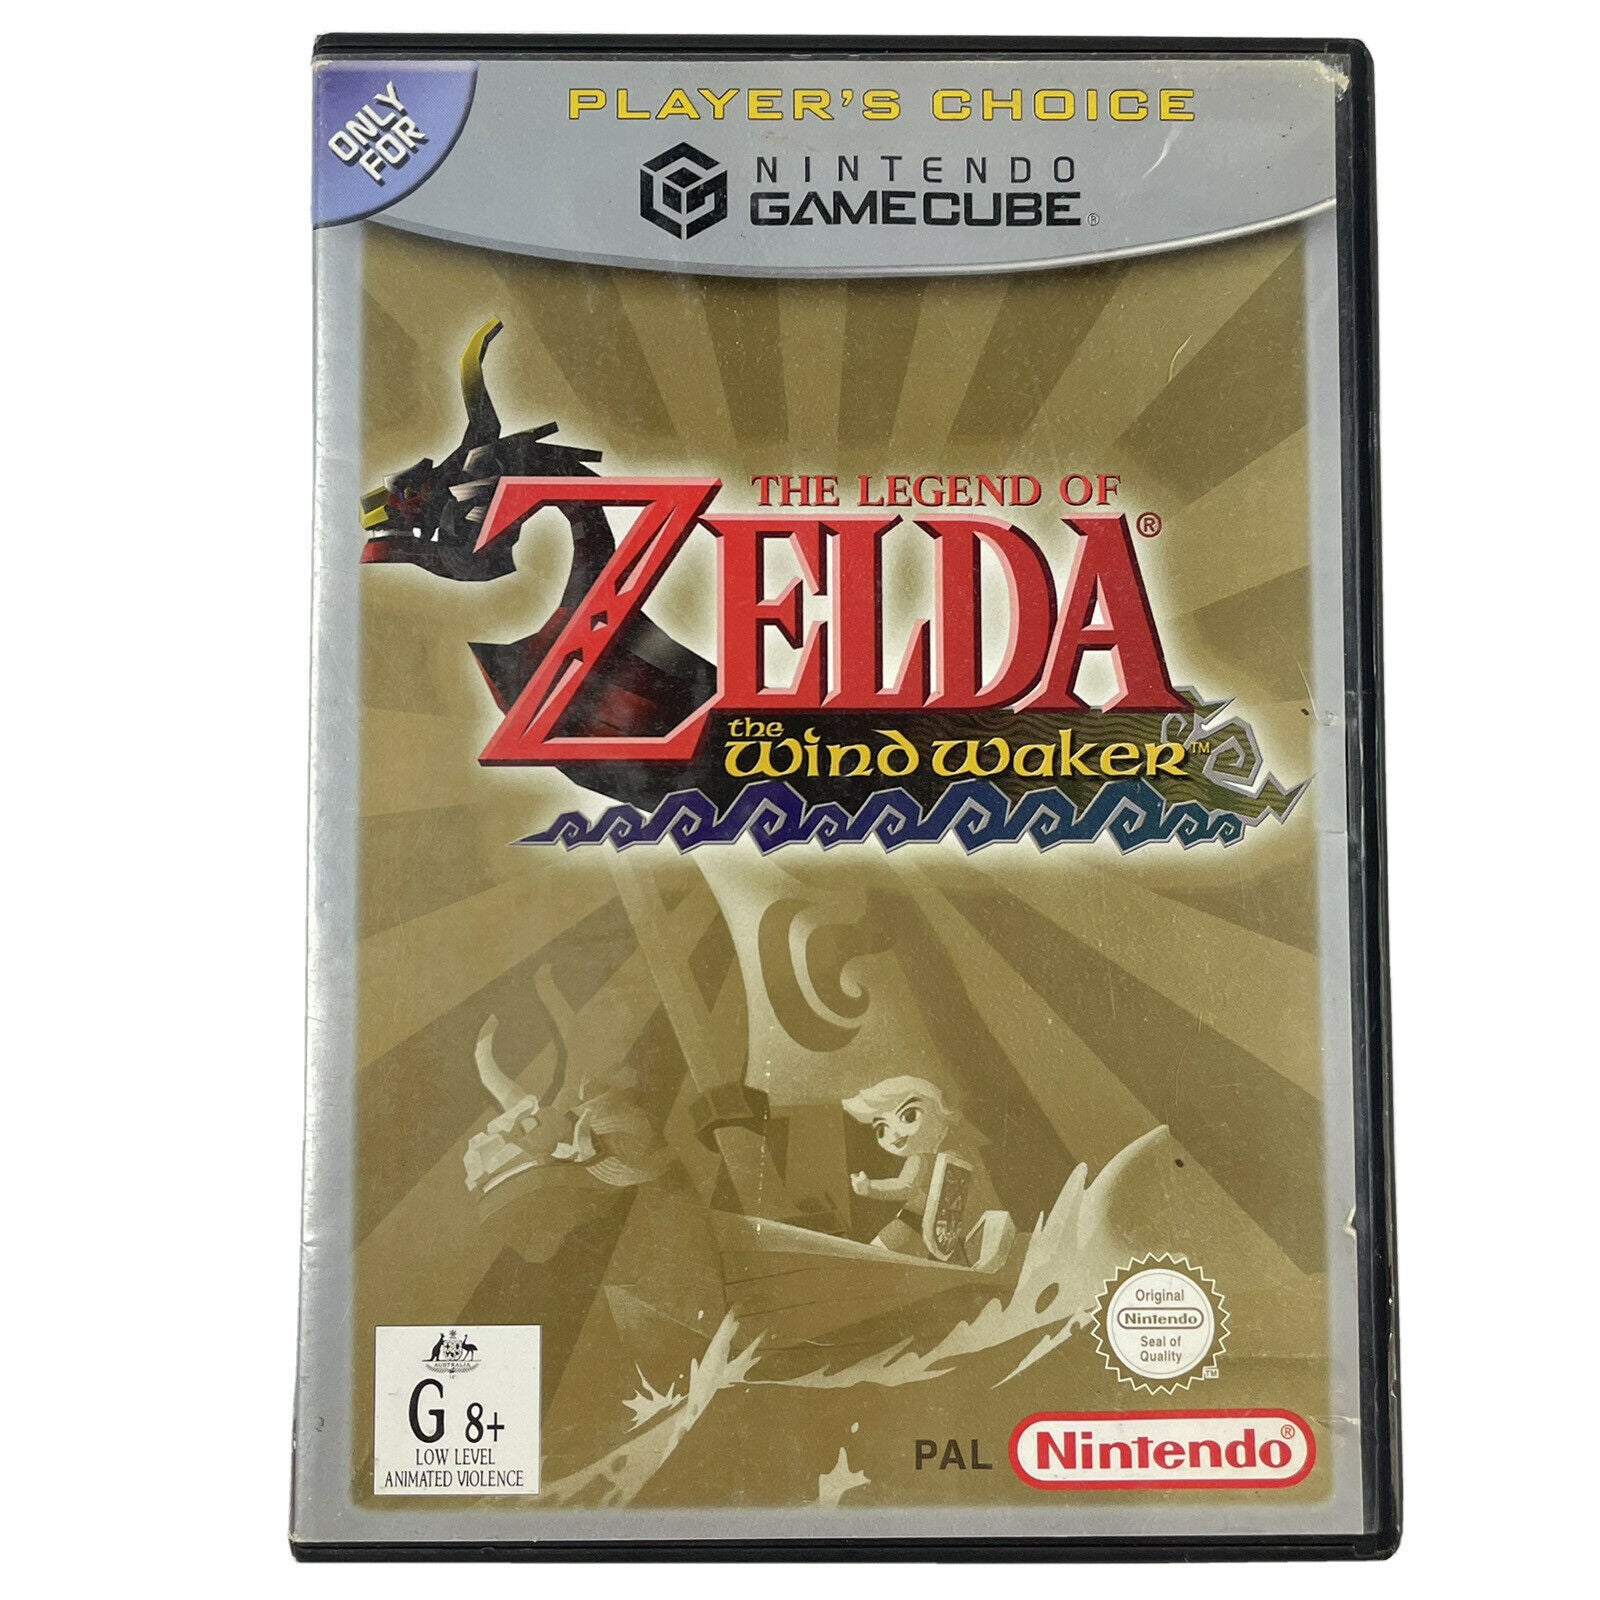 Game | Nintendo GameCube | Zelda Wind Waker [Player's Choice]